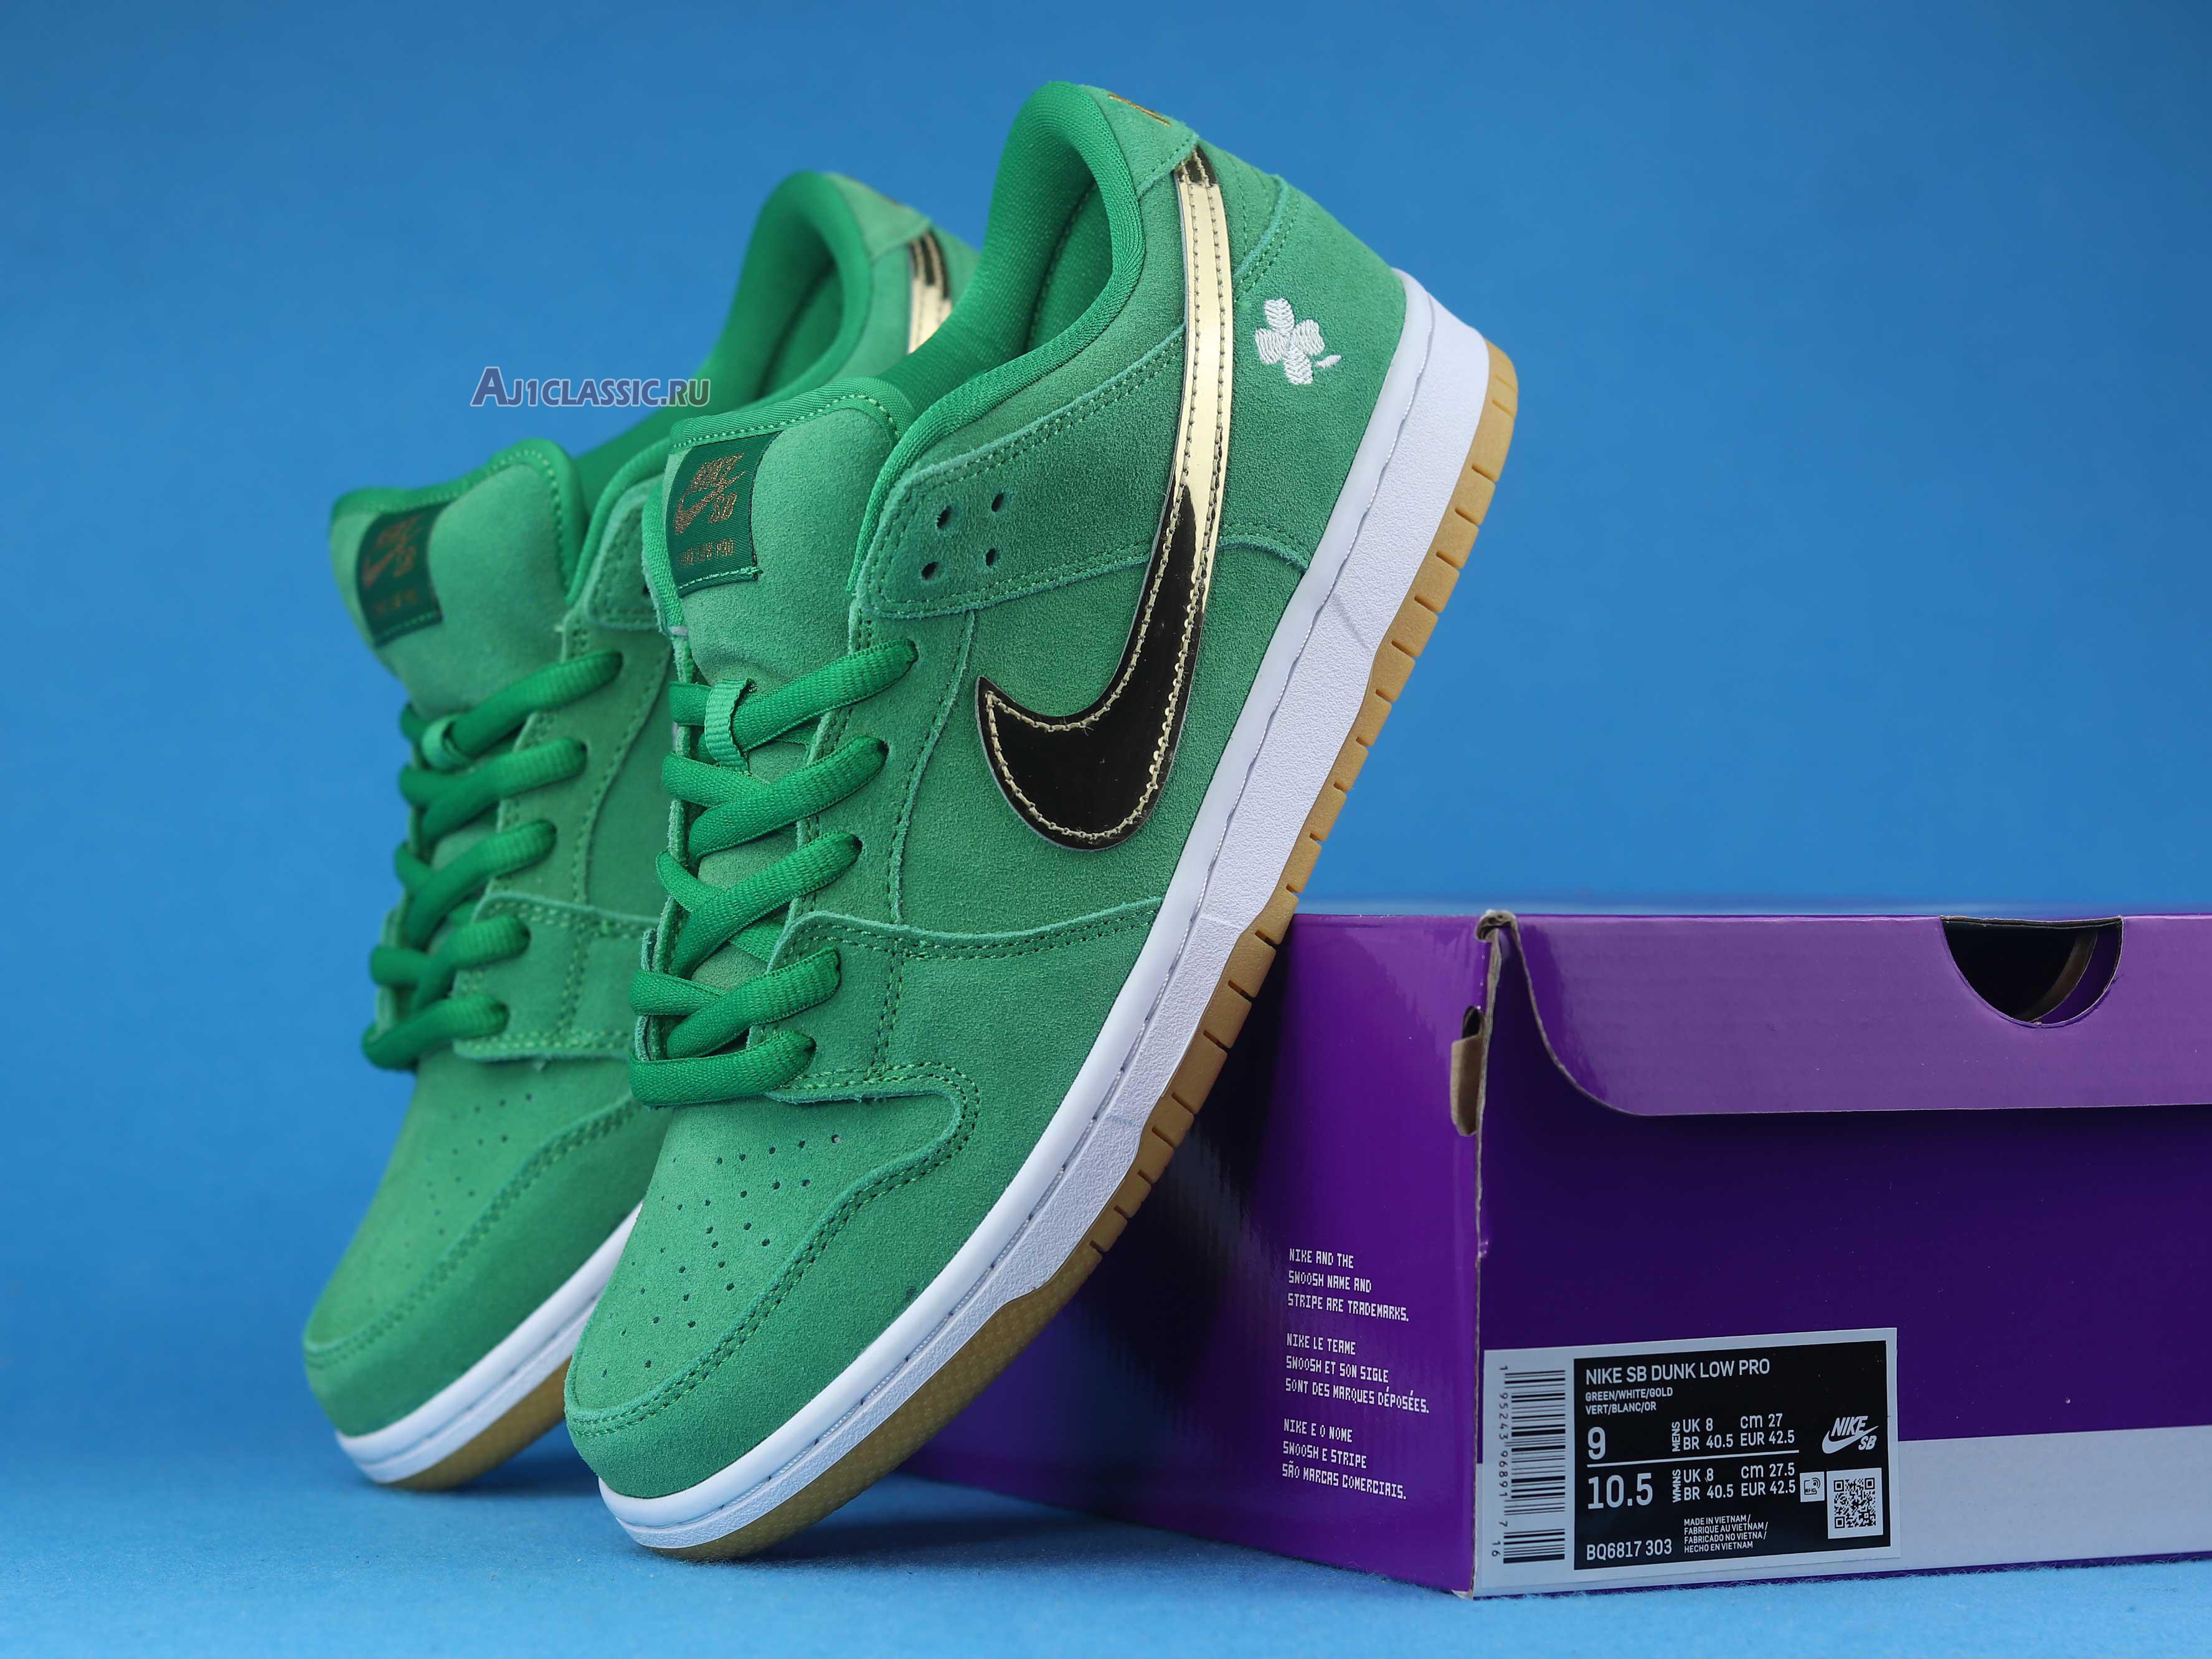 Nike Dunk Low SB St Patricks Day BQ6817-303 Lucky Green/Metallic Gold Sneakers